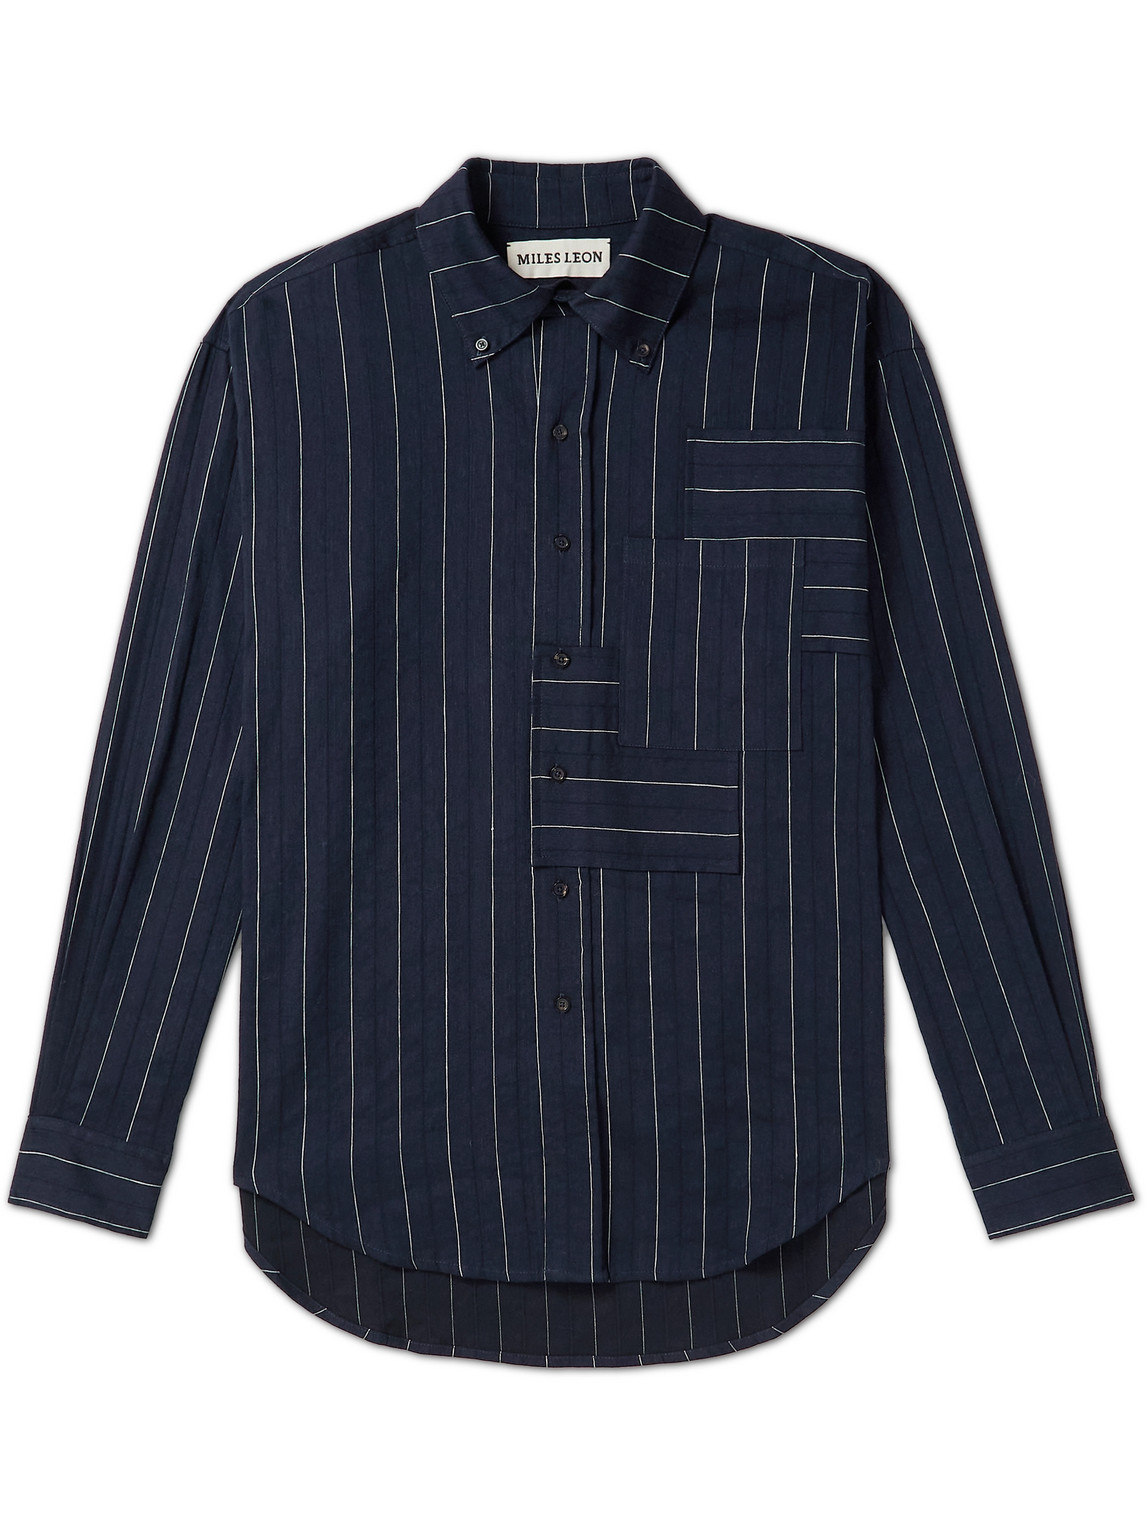 Miles Leon Zen Striped Wool, Linen And Cotton-blend Shirt In Blue